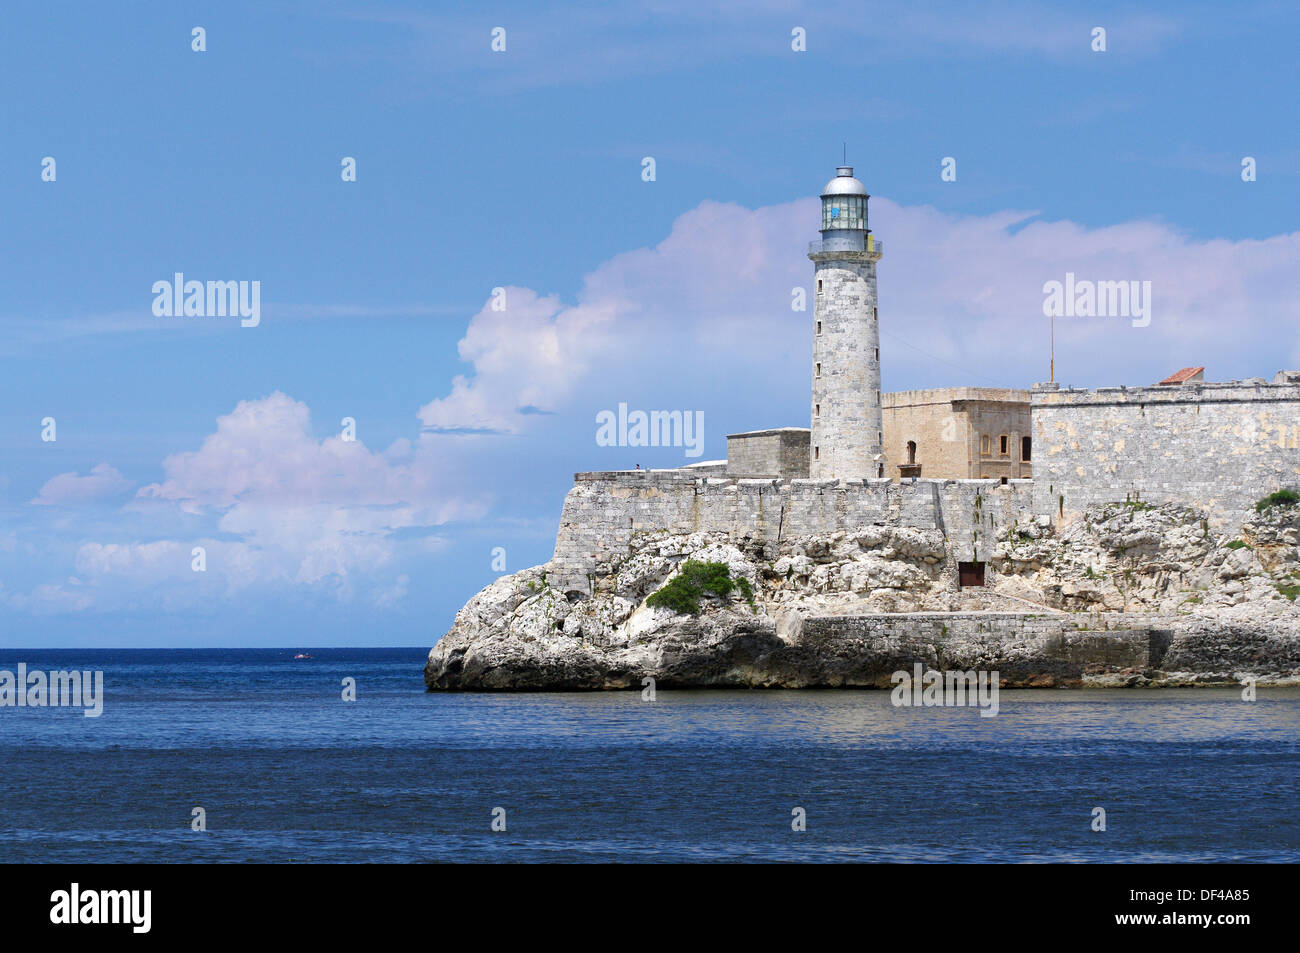 Faro Castillo del Morro - lighthouse located at the entrance to Havana bay in Havana, Cuba Stock Photo